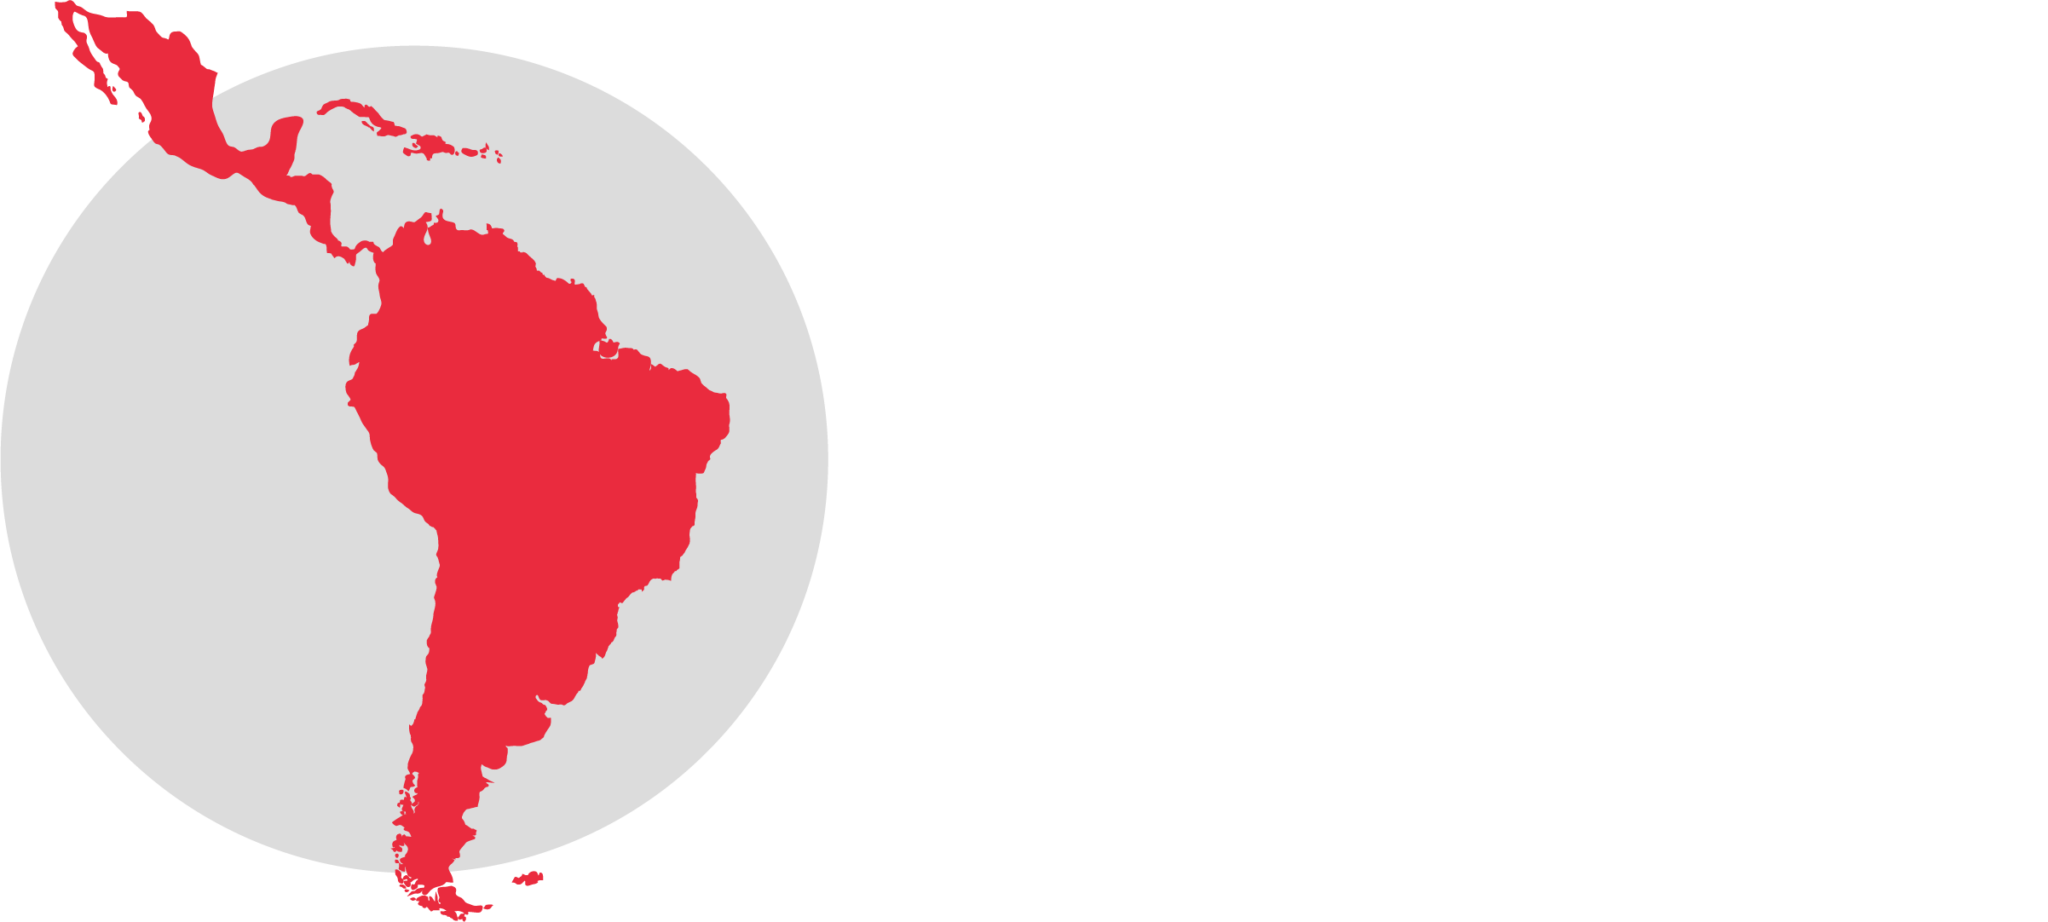 Logística America Latina 3058